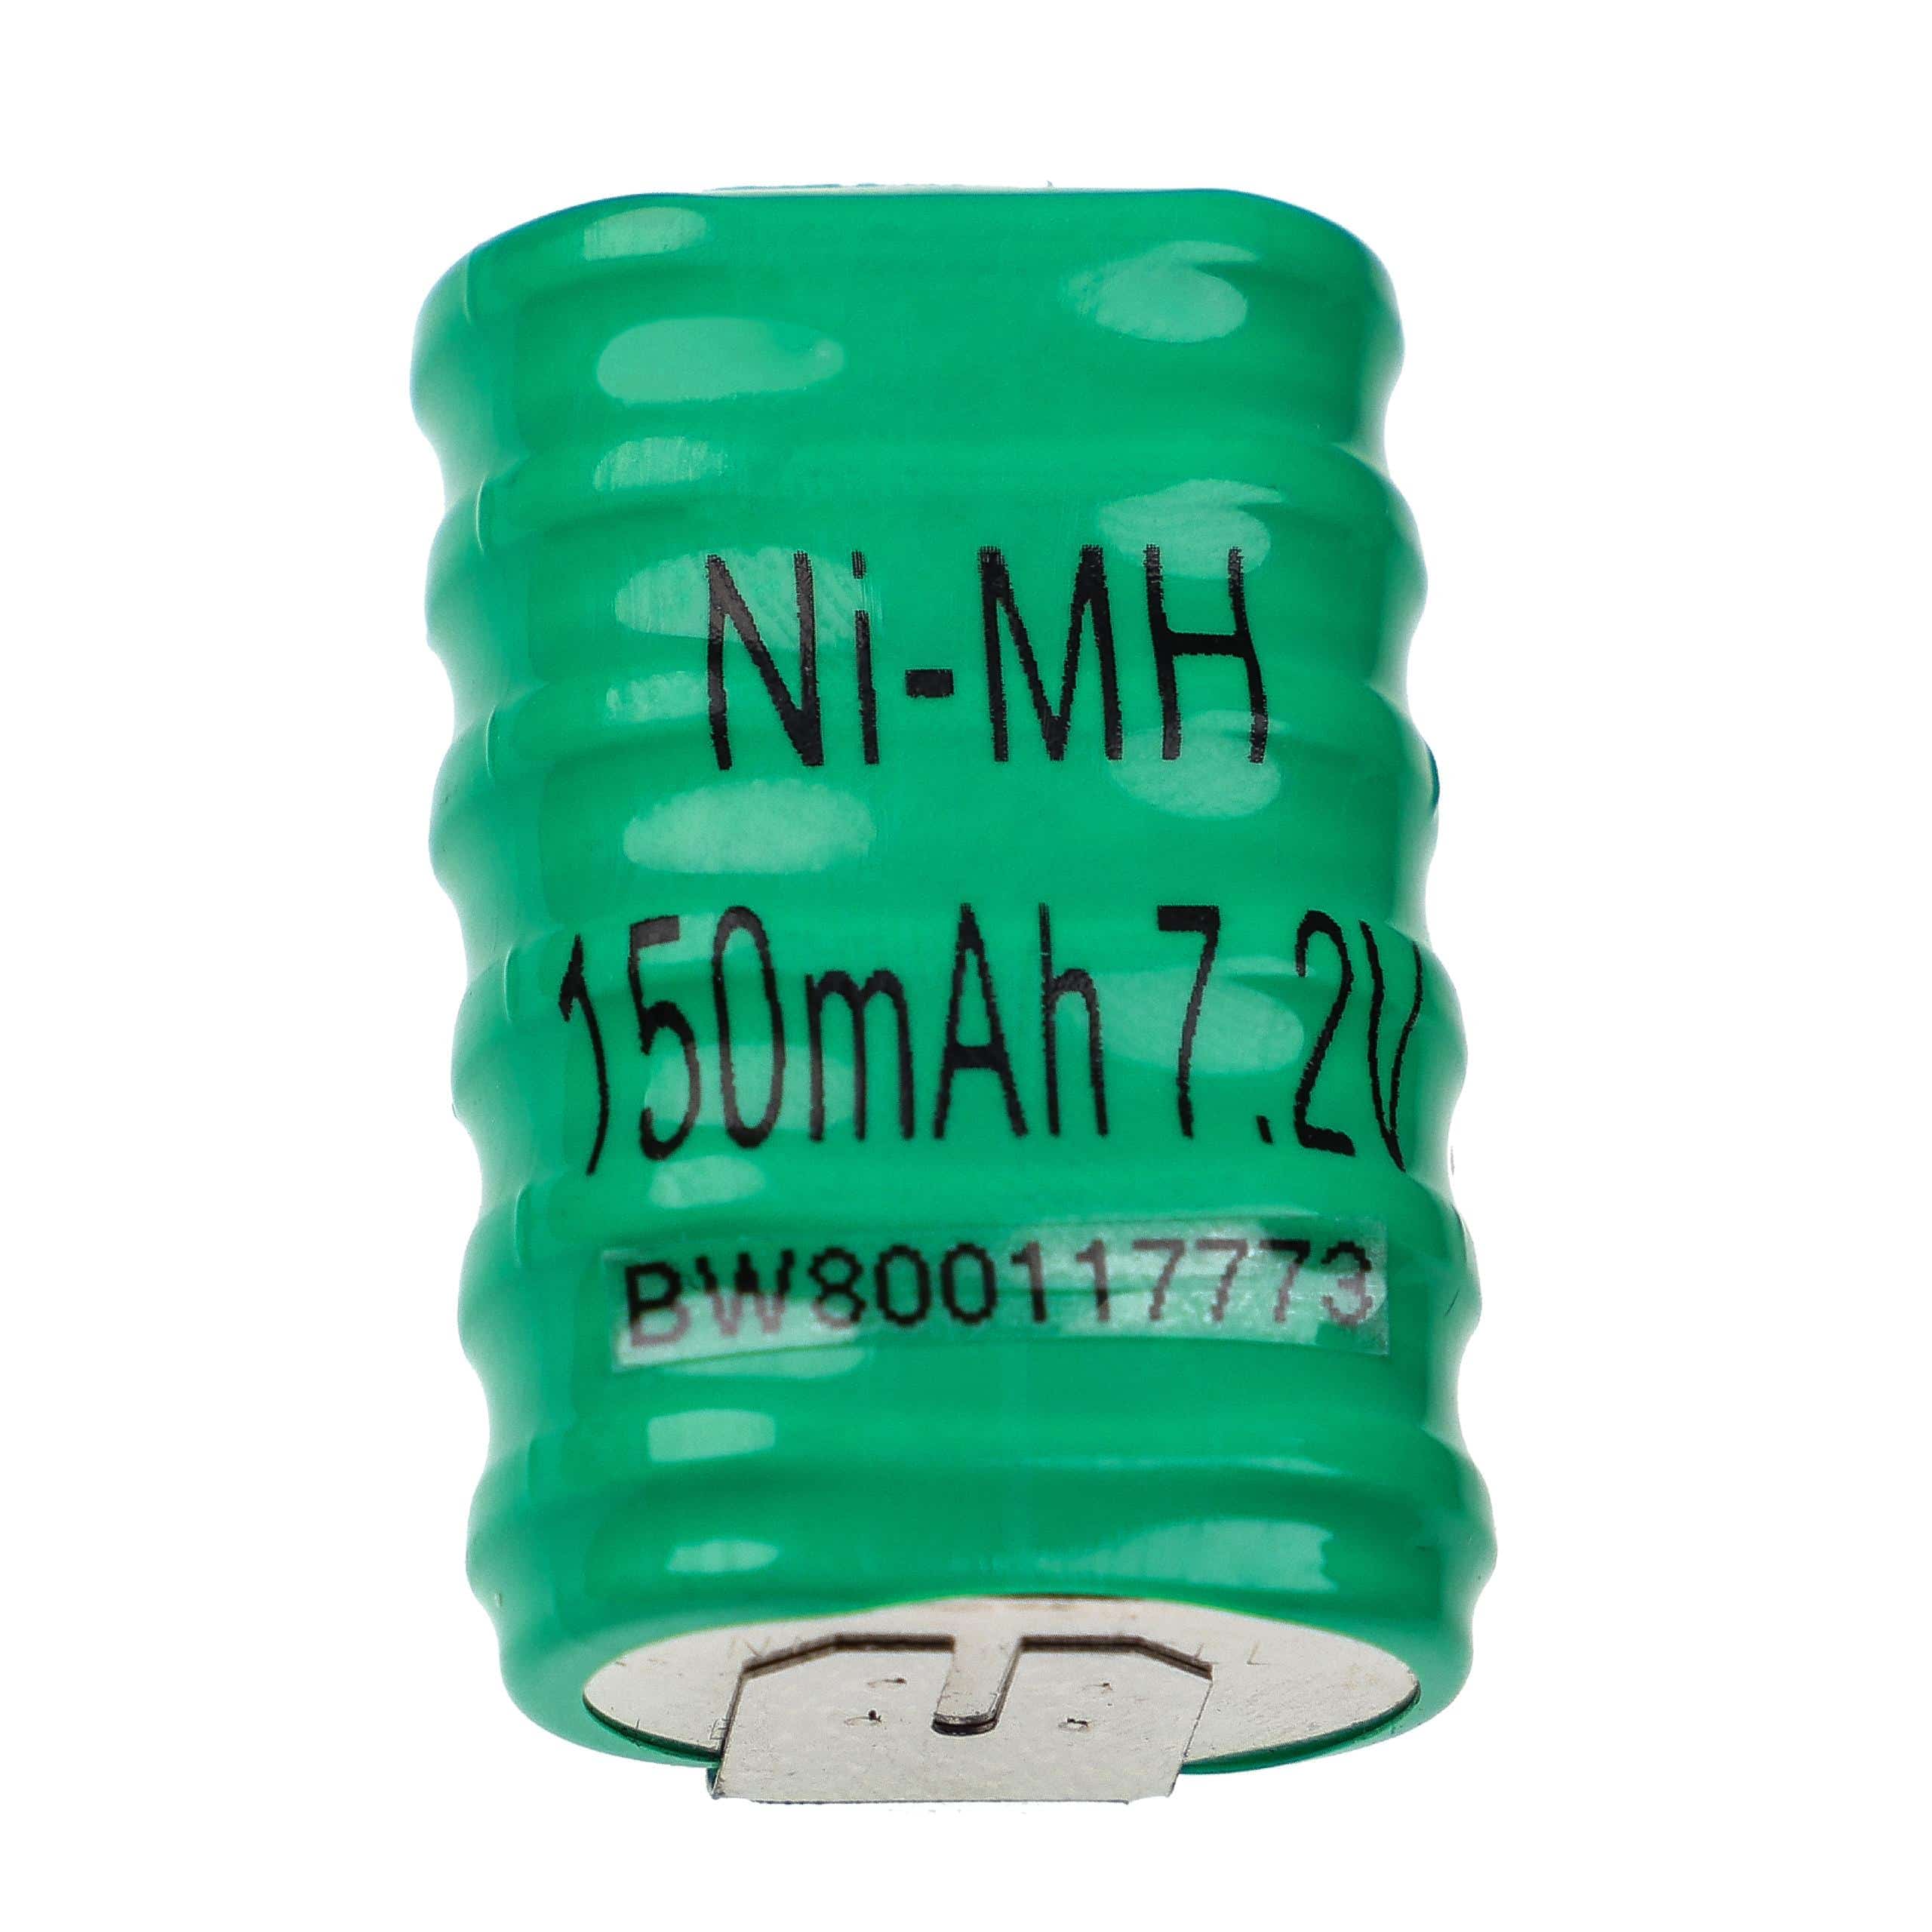 Akumulator guzikowy (6x ogniwo) typ 6/V150H 3 pin do modeli, lamp solarnych itp. - 150 mAh, 7,2 V, NiMH